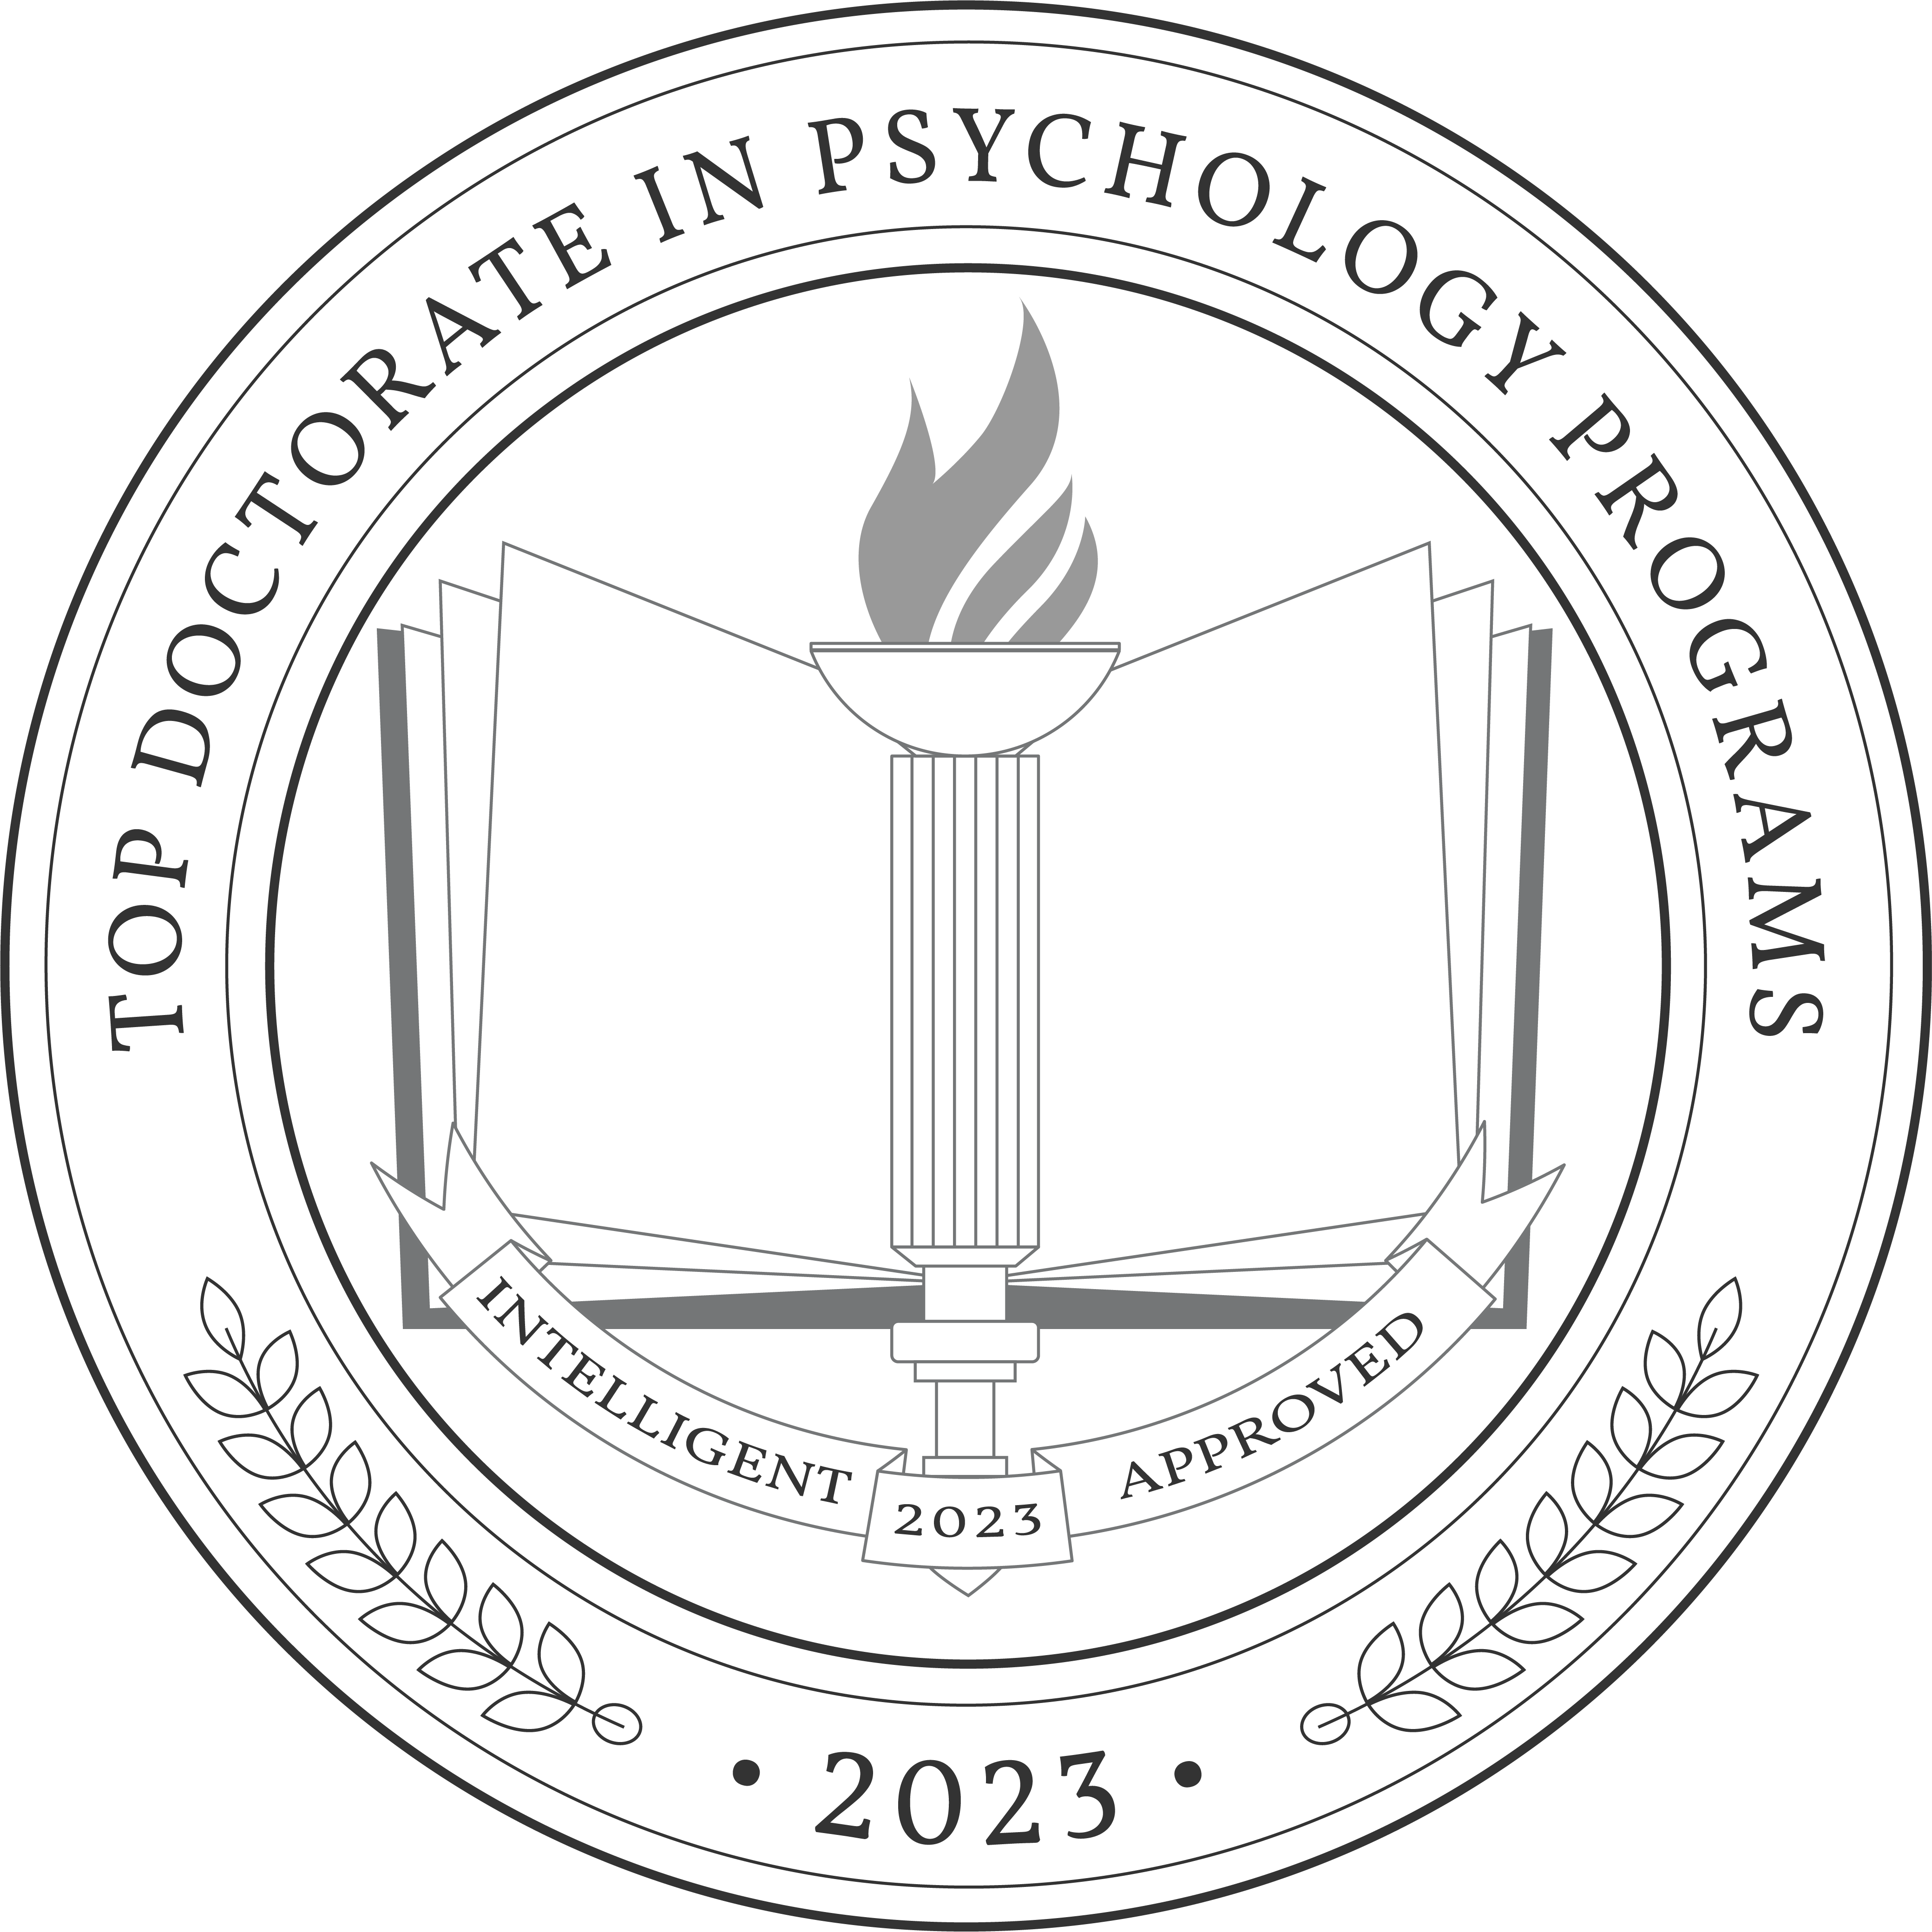 Top Doctorate in Psychology Programs 2023